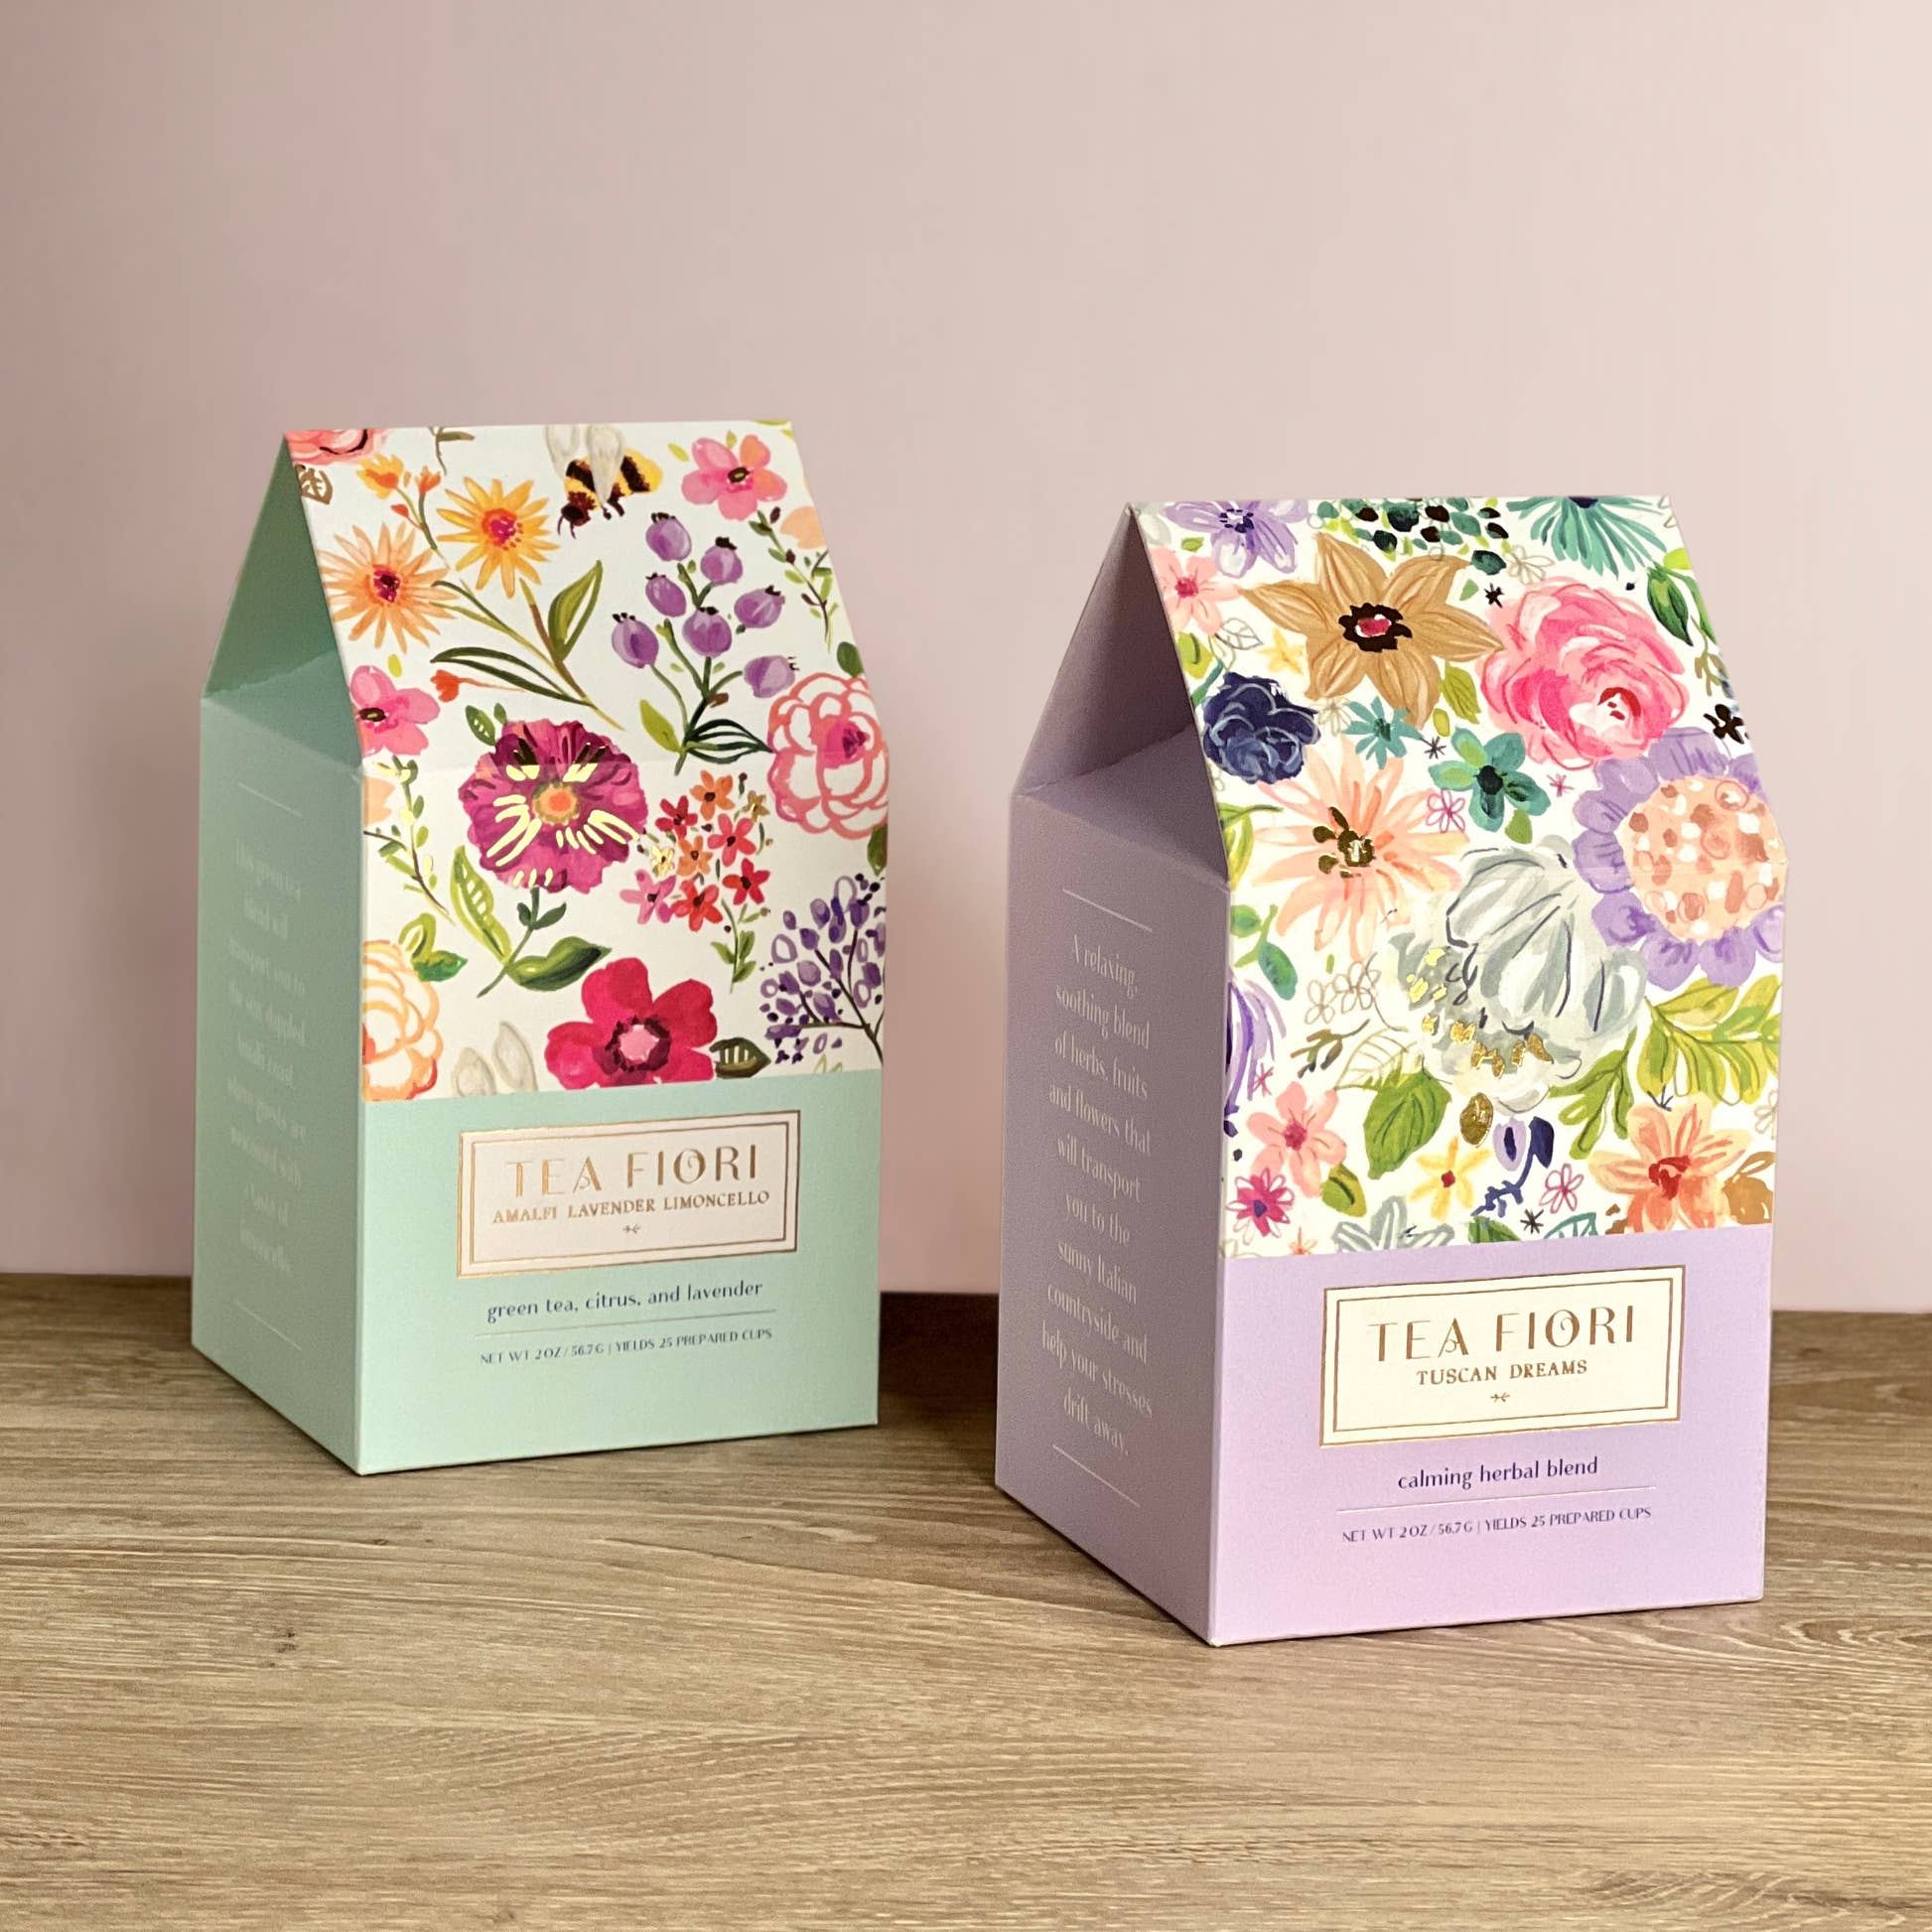 Tea Fiori Amalfi Lavender Limoncello and Tuscan Dreams purple and blue tea gift boxes